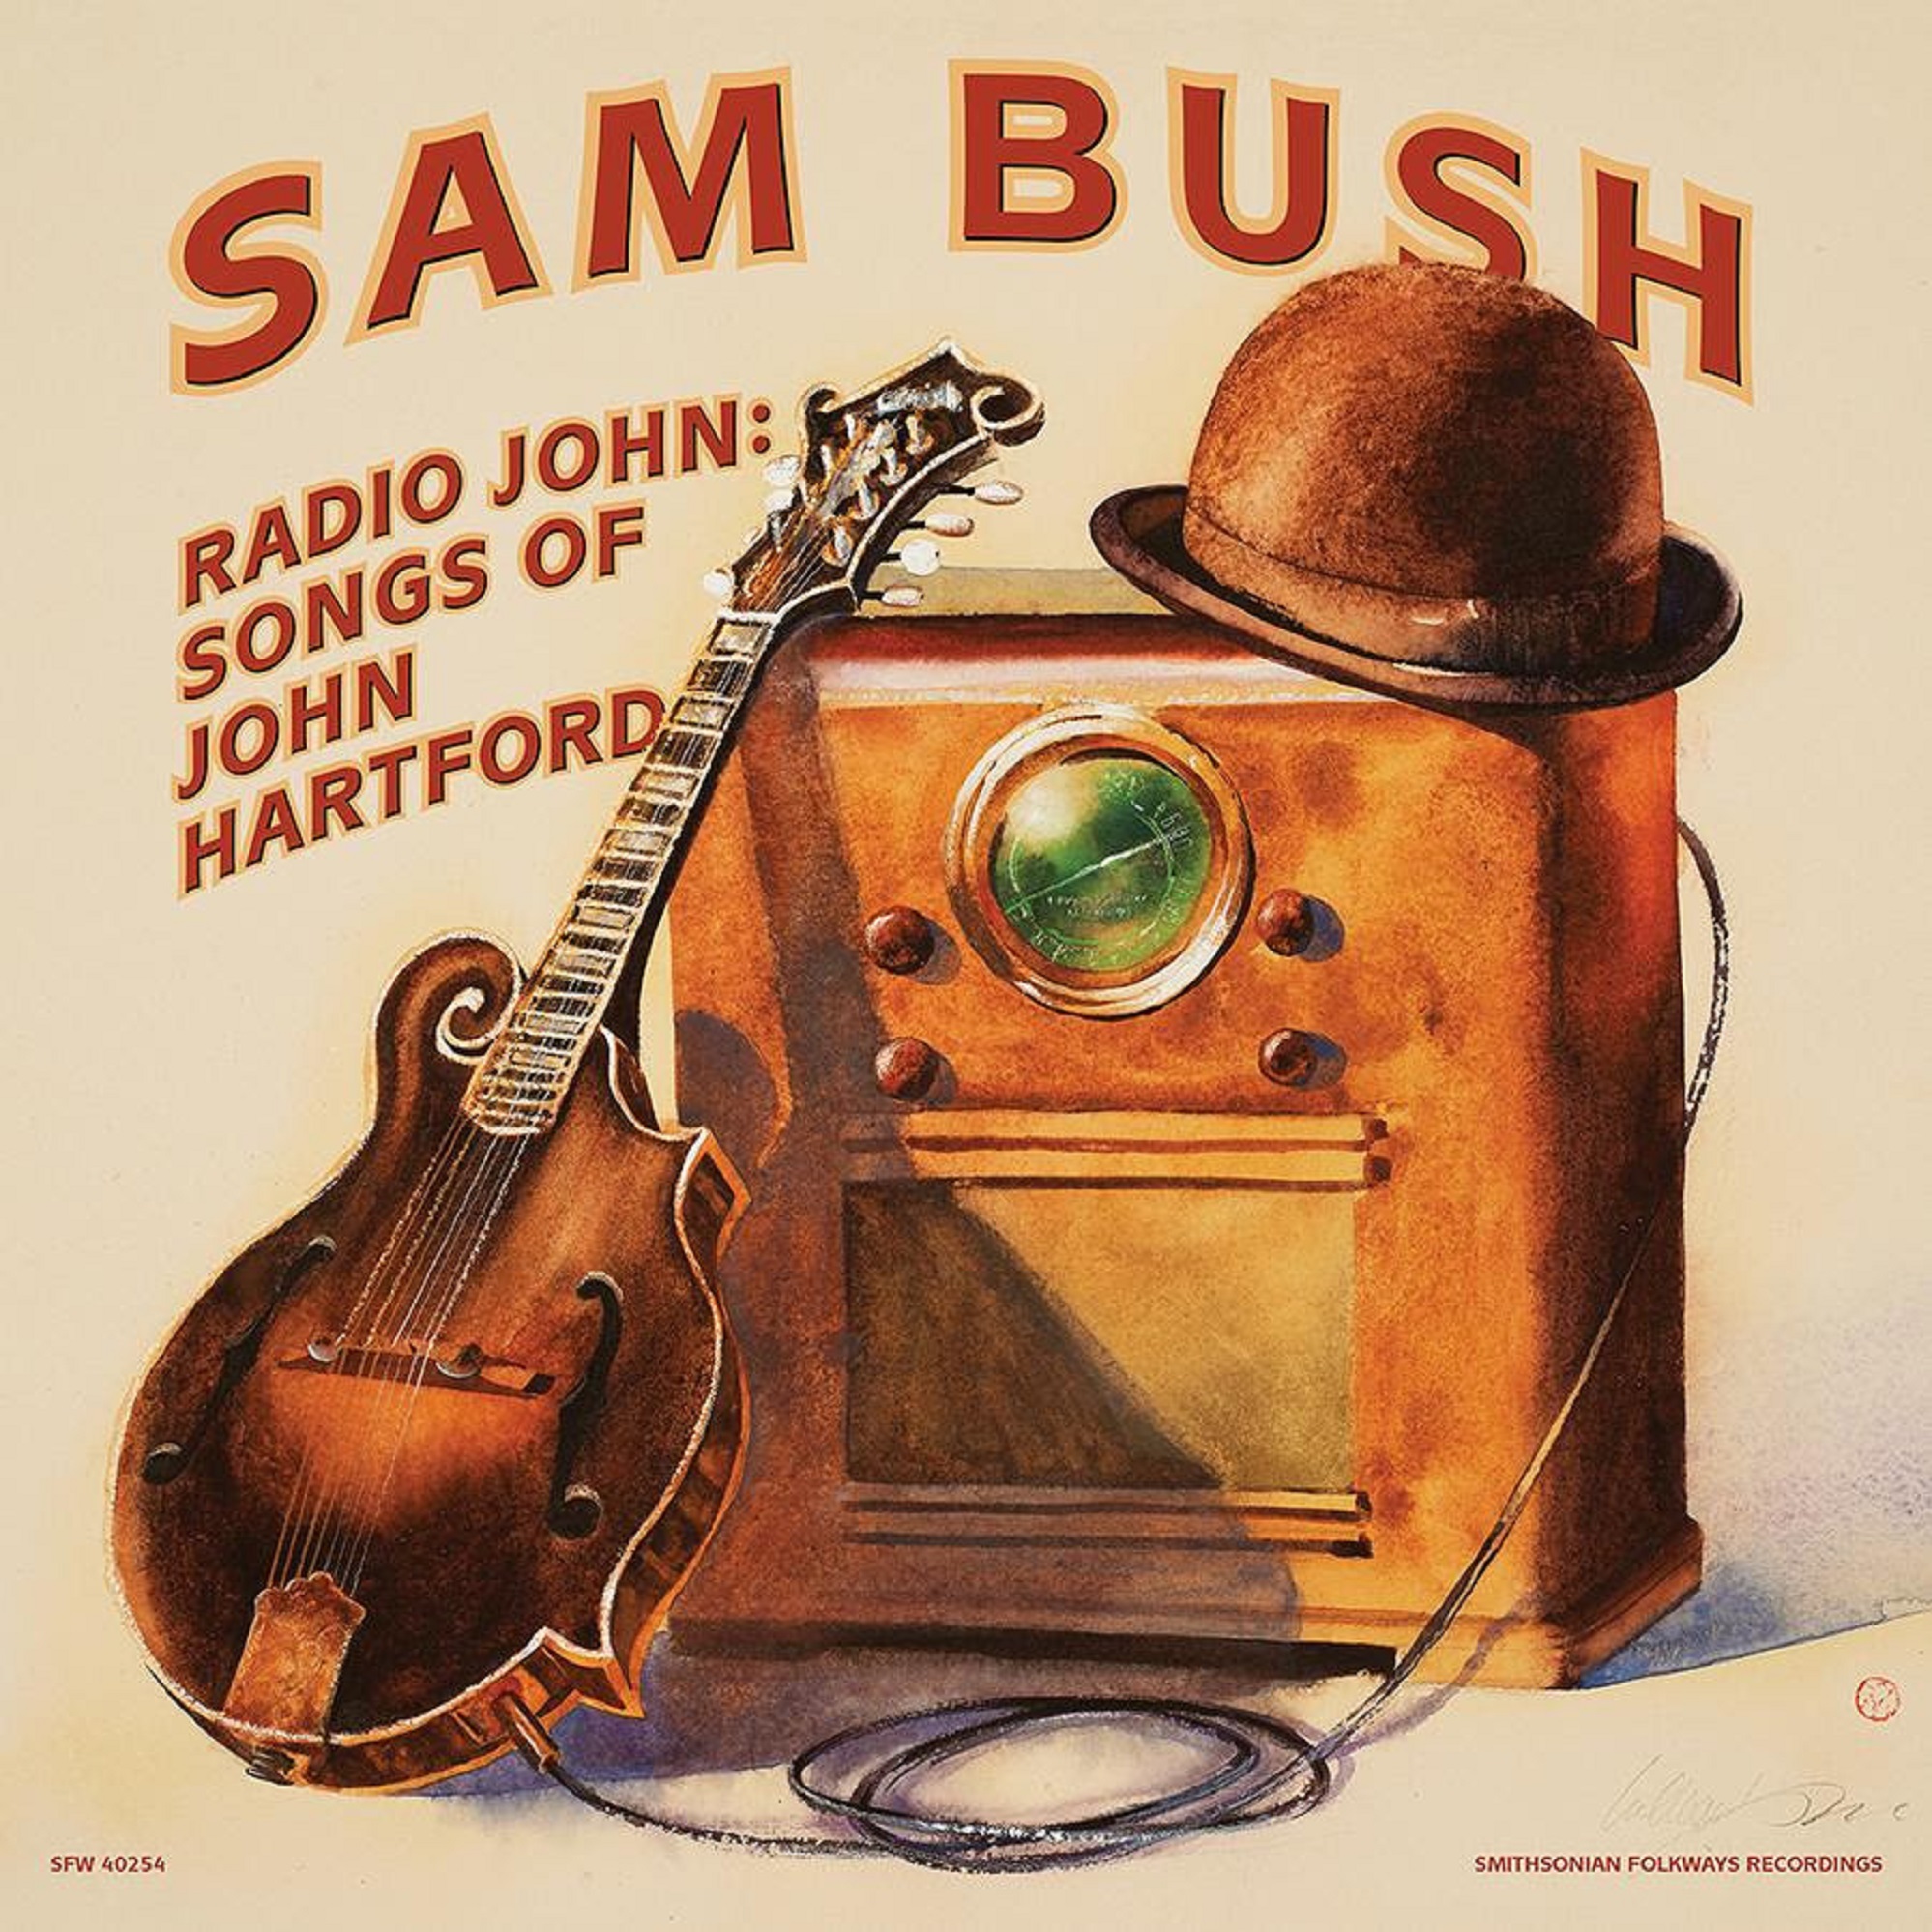 Sam Bush’s ‘Radio John: Songs of John Hartford,’ Out November 11 on Smithsonian Folkways